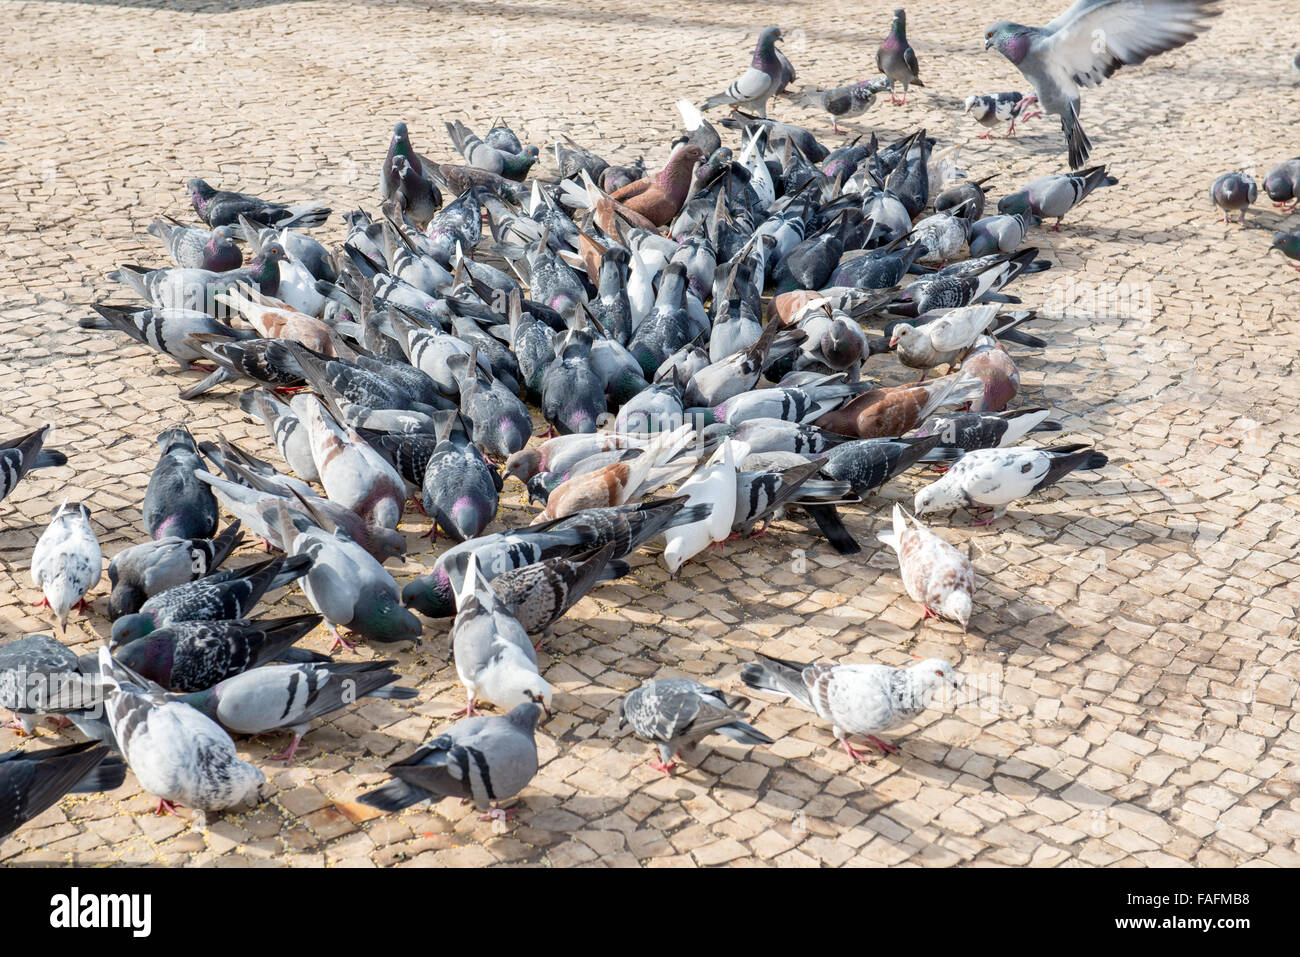 Flock of feeding birds on pavement in city Stock Photo